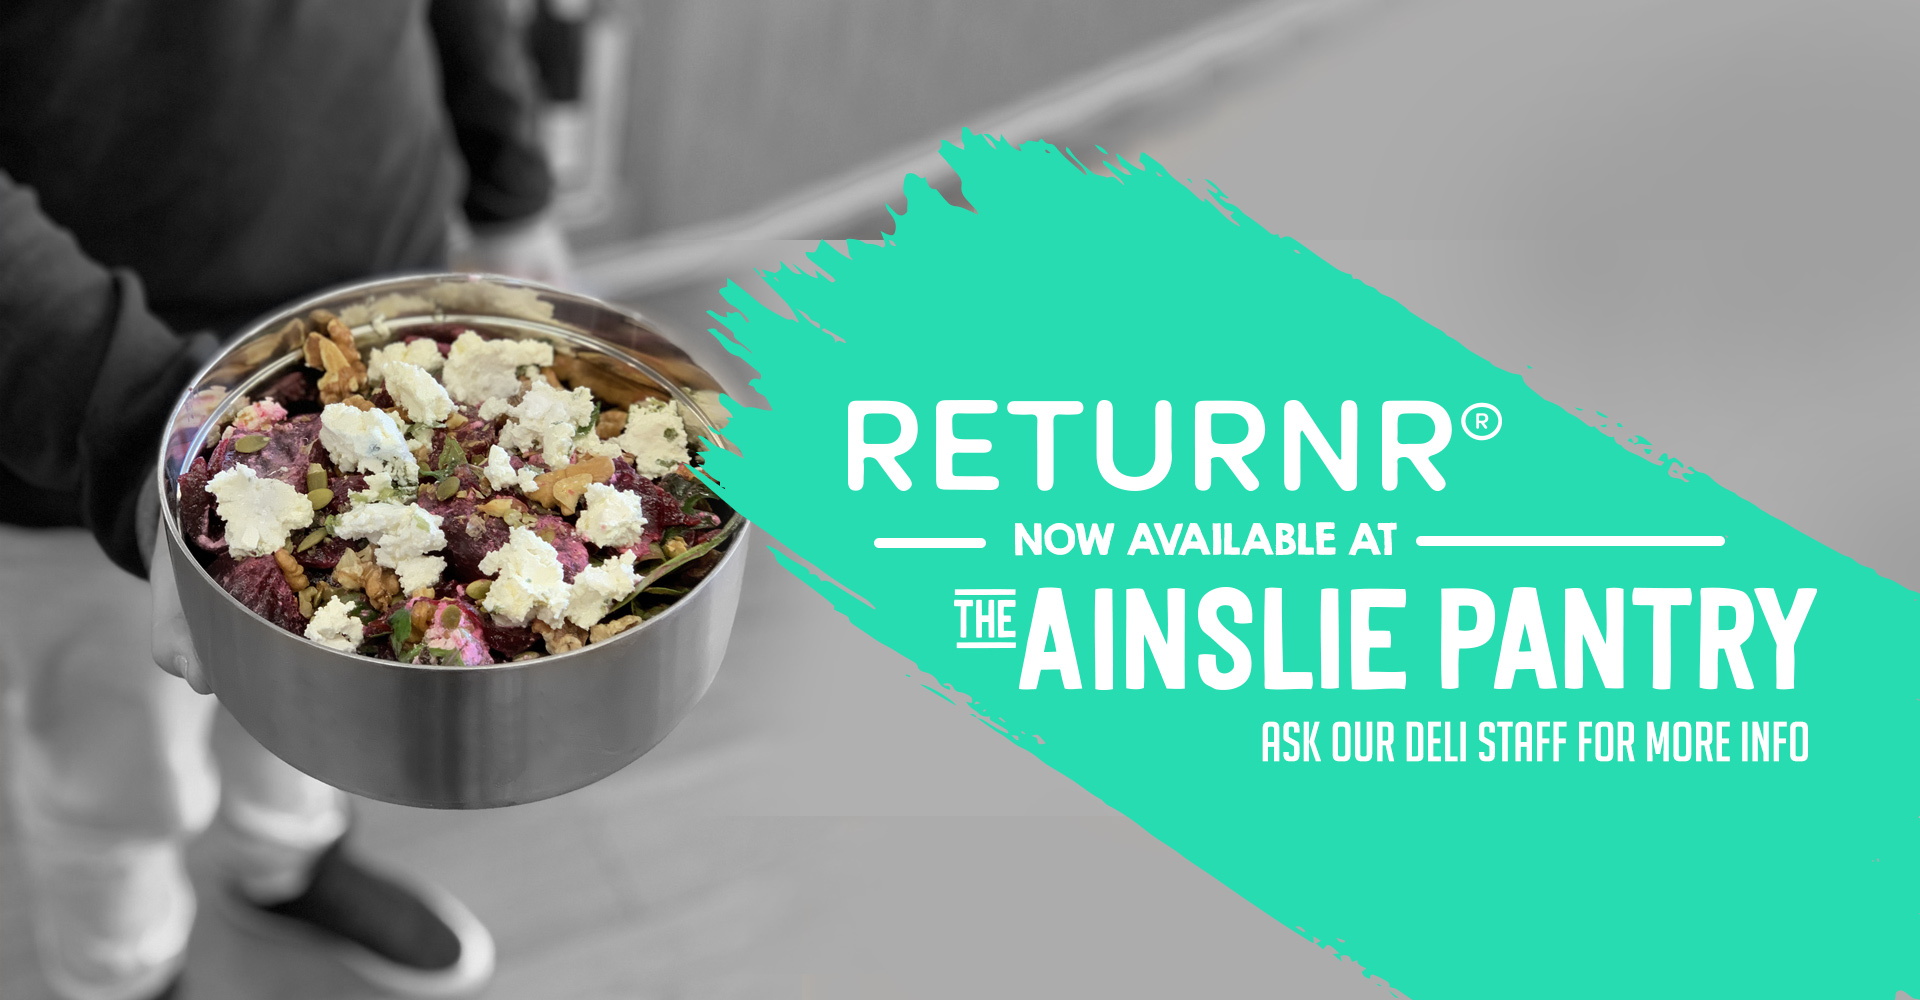 Returnr available at Ainslie IGA